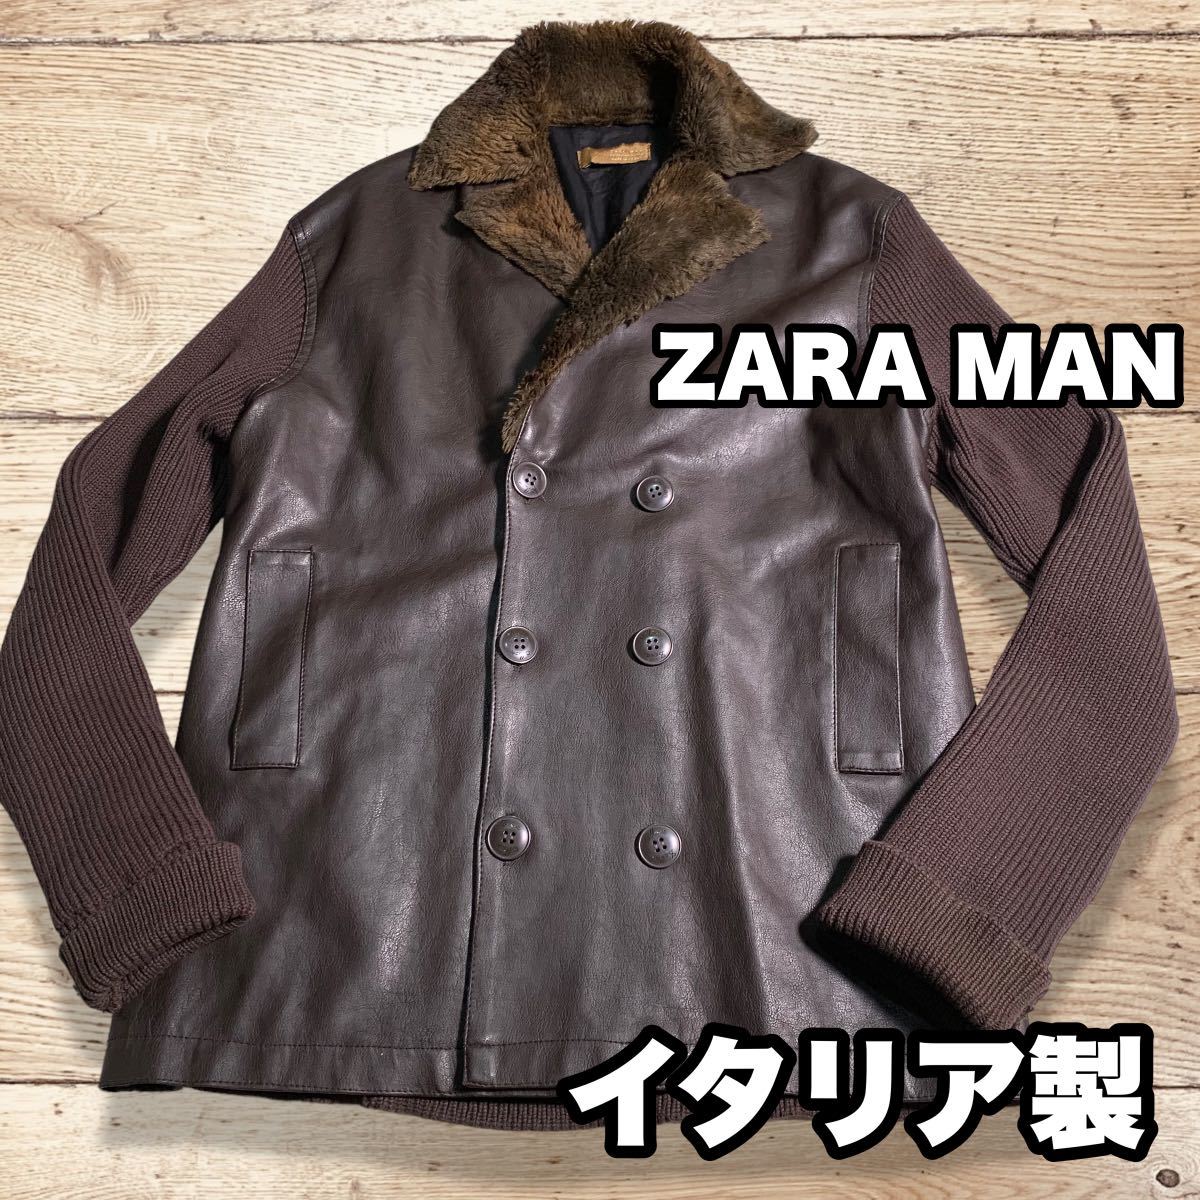 ZARA MAN XLサイズ イタリア製 ニットブルゾン ダブル ジャケット